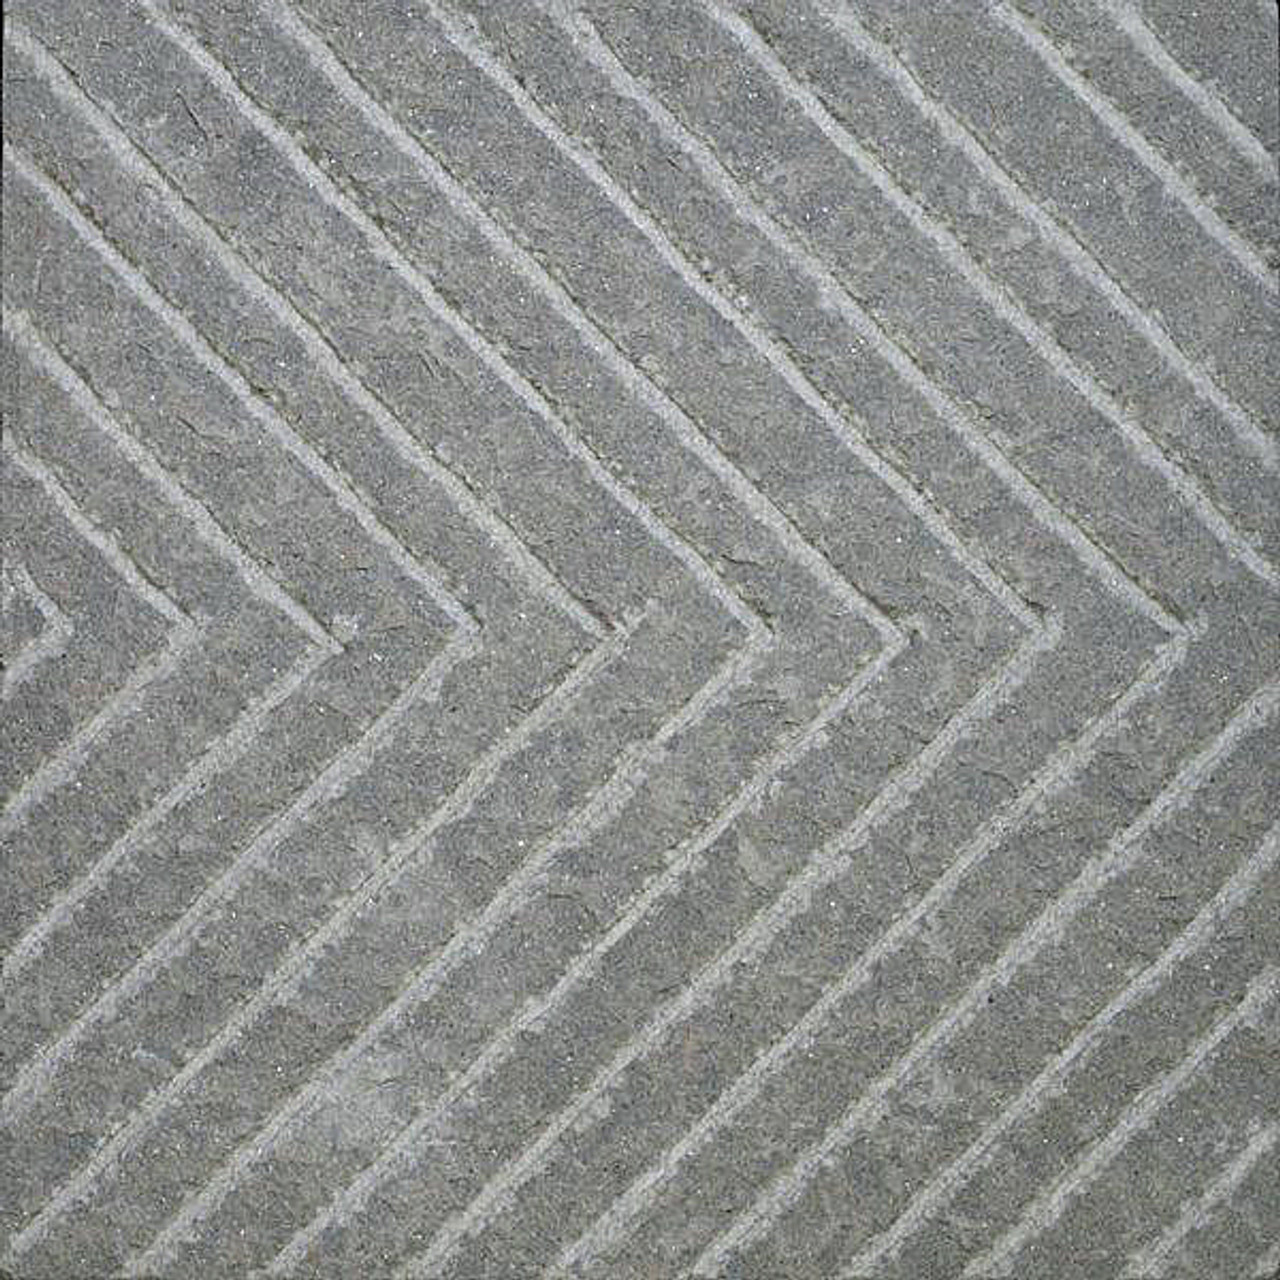 Bluestone - blue/gray sandstone - flamed herringbone striped finish